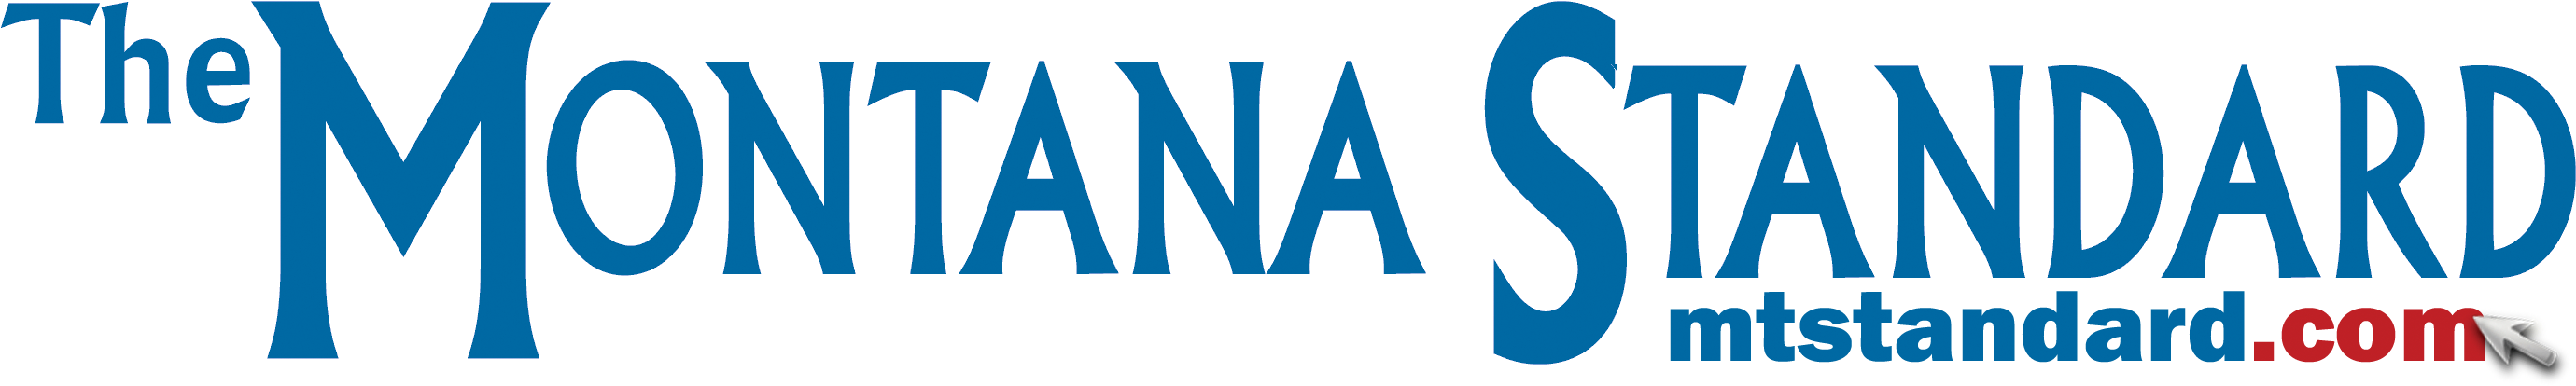 The Montana Standard - Montana Standard Logo (2820x537)